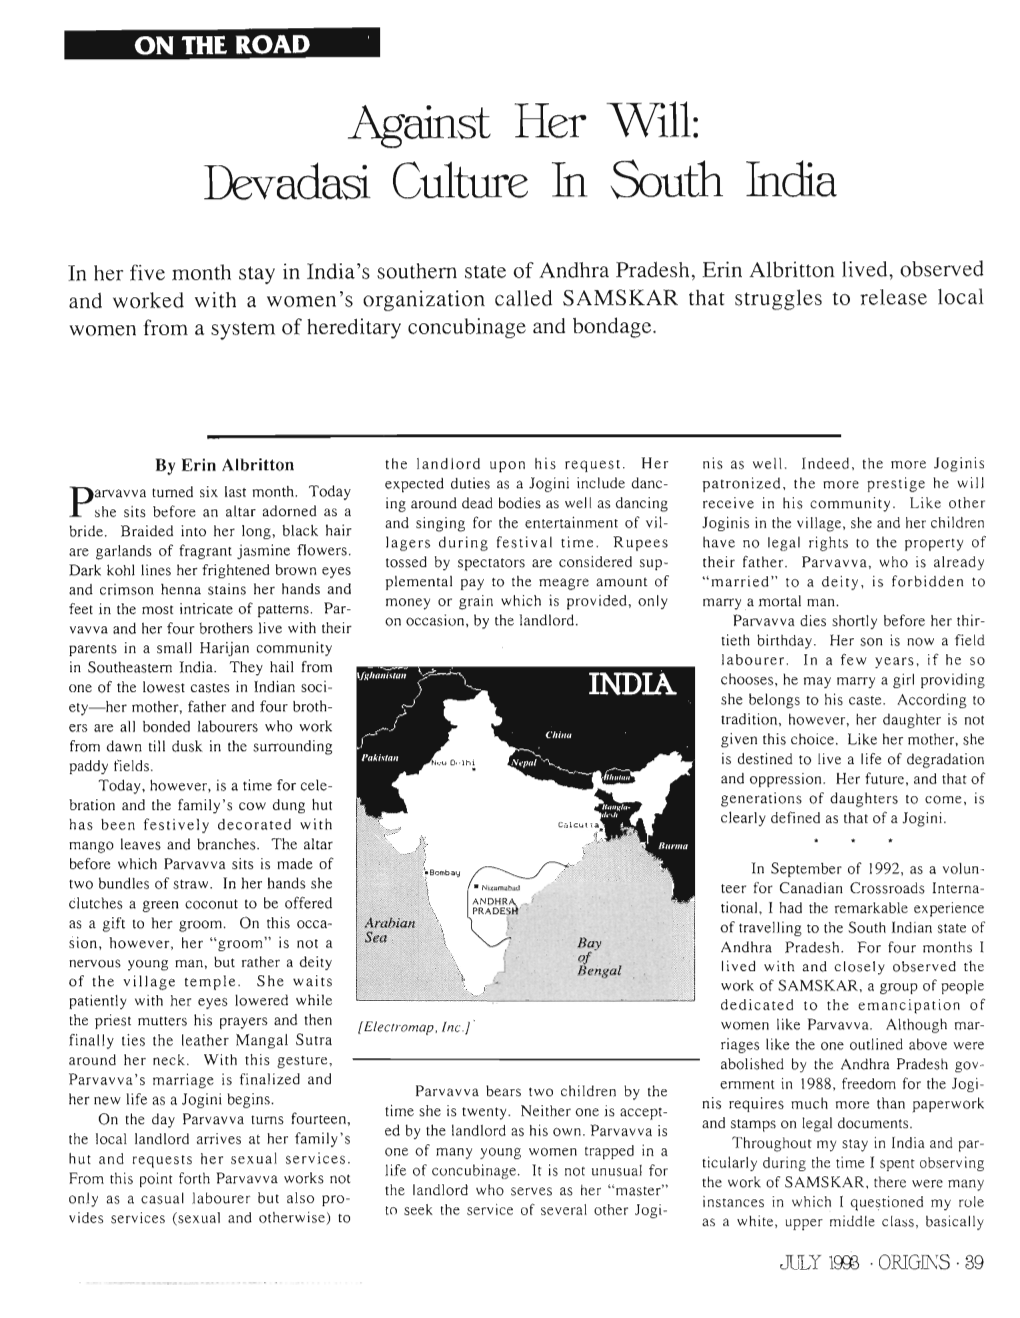 Devadasi Culture in South India